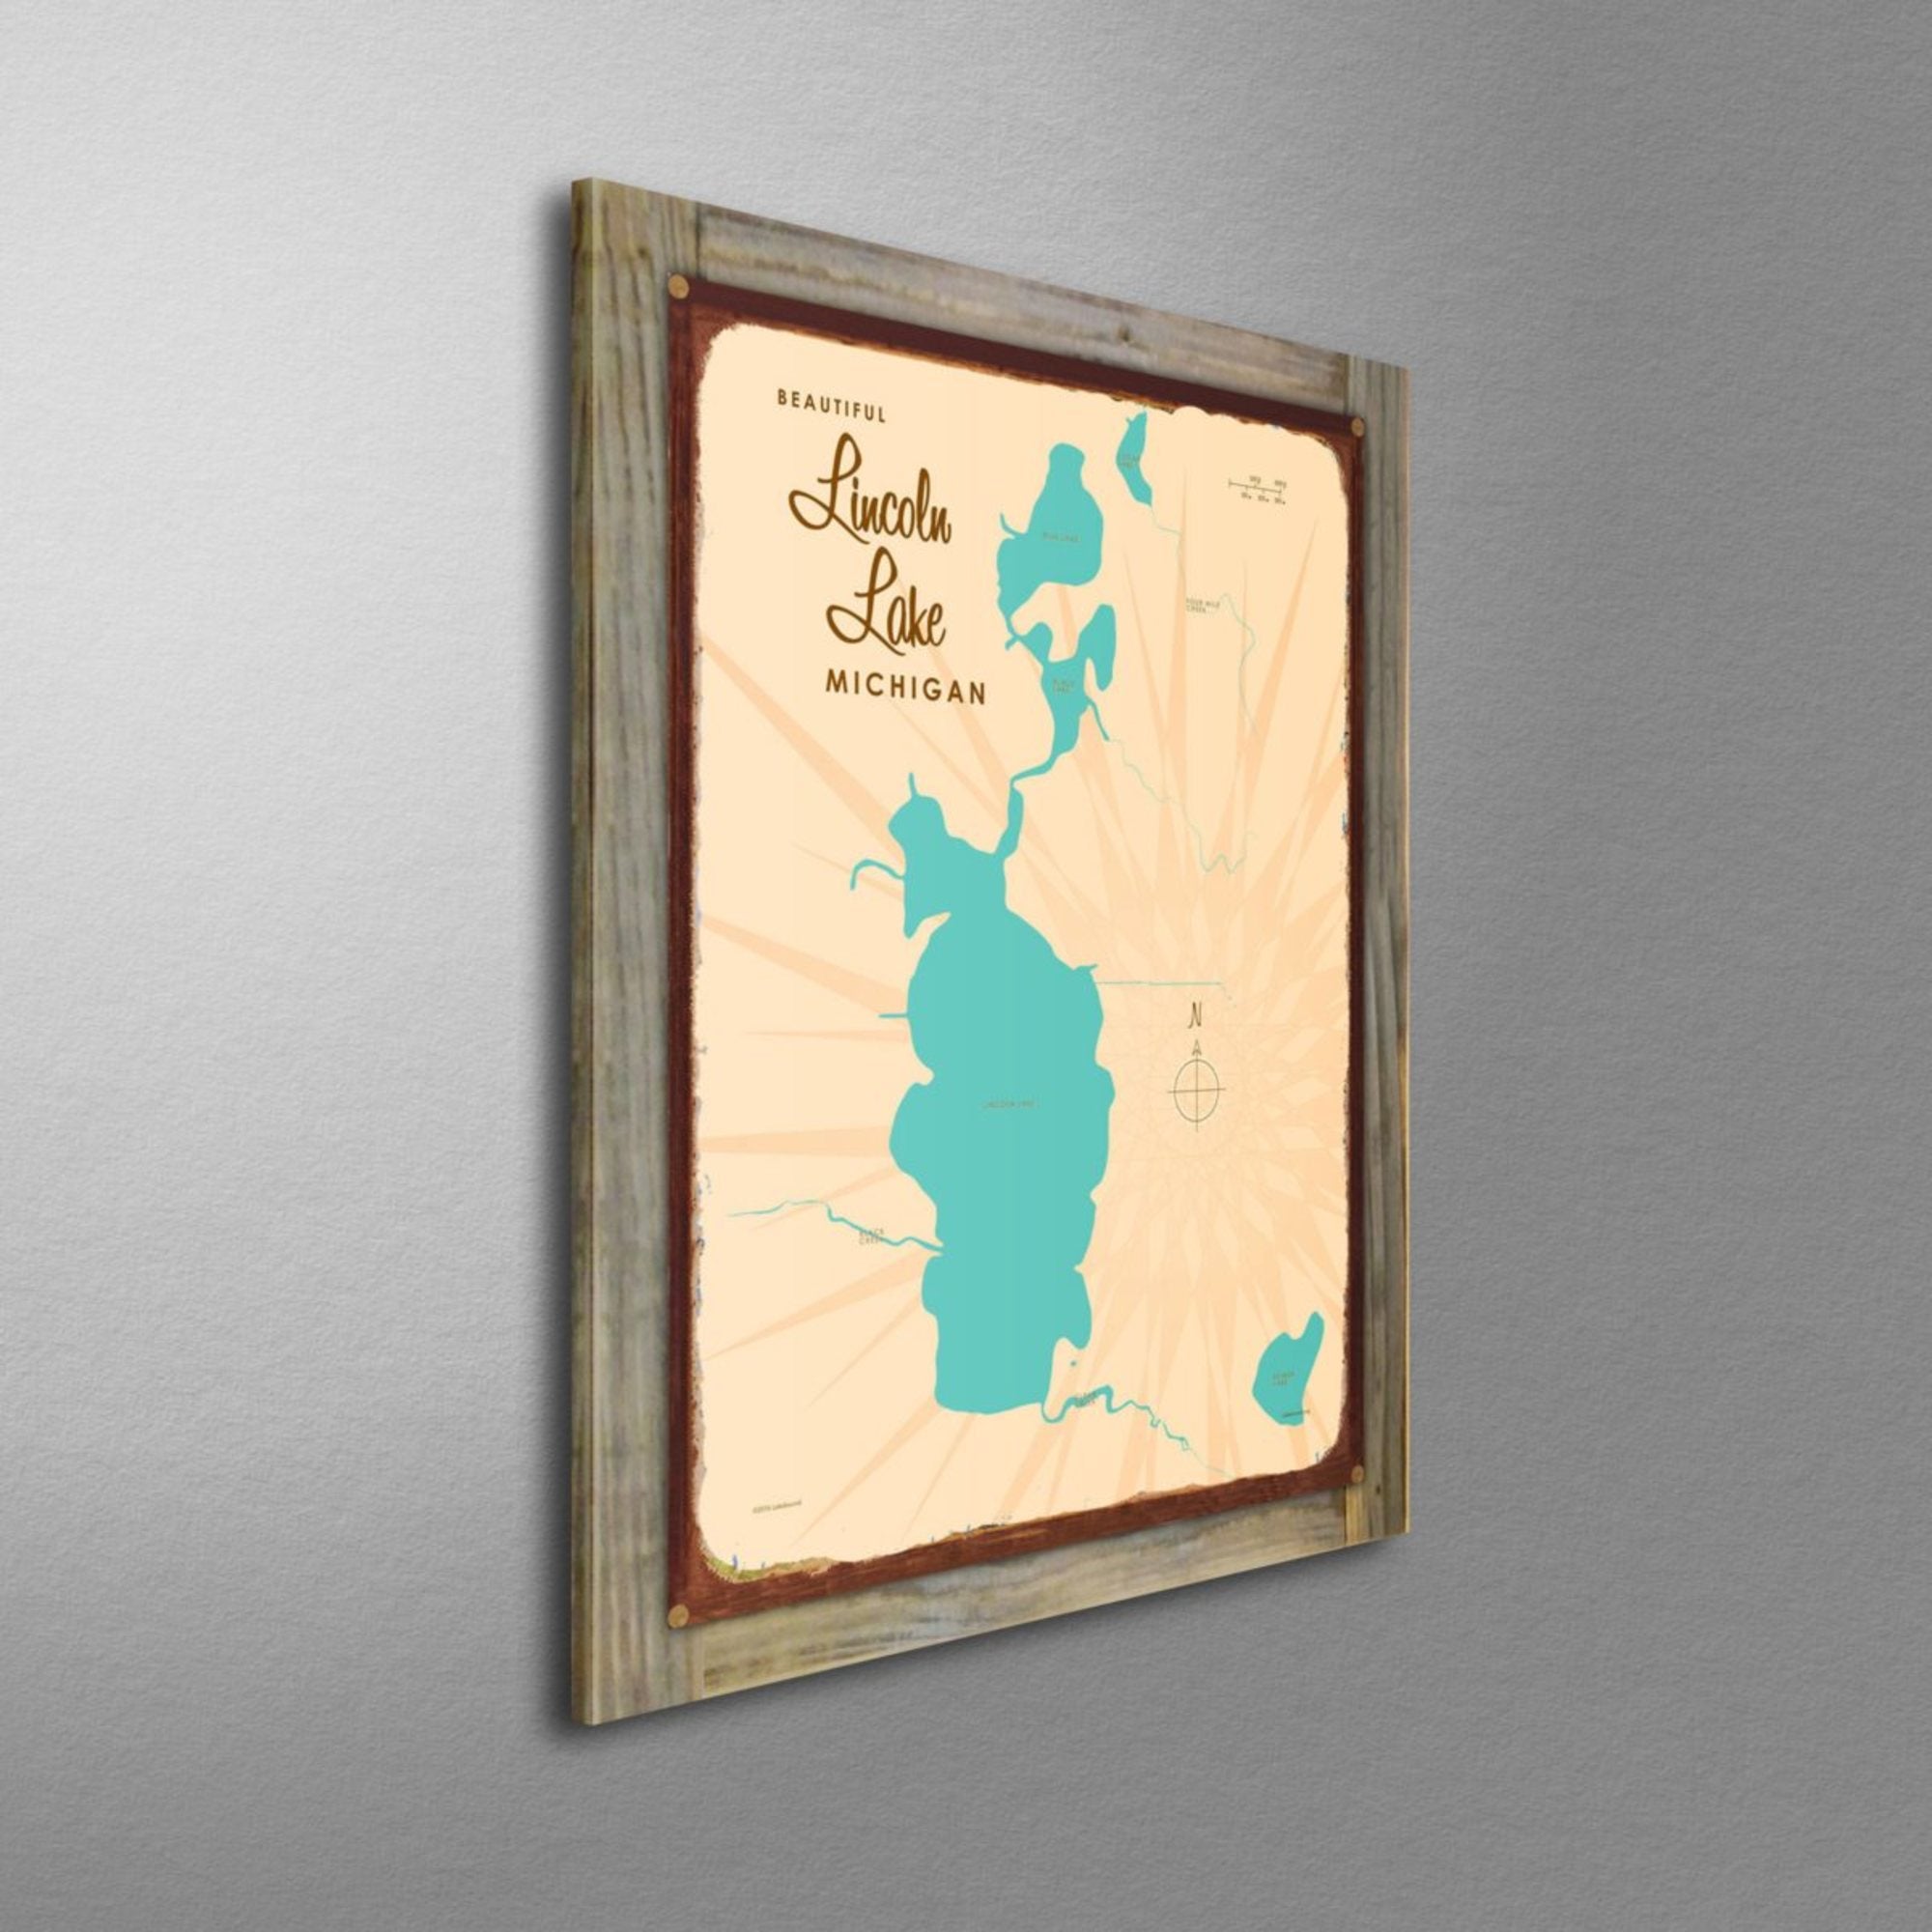 Lincoln Lake Michigan, Wood-Mounted Rustic Metal Sign Map Art